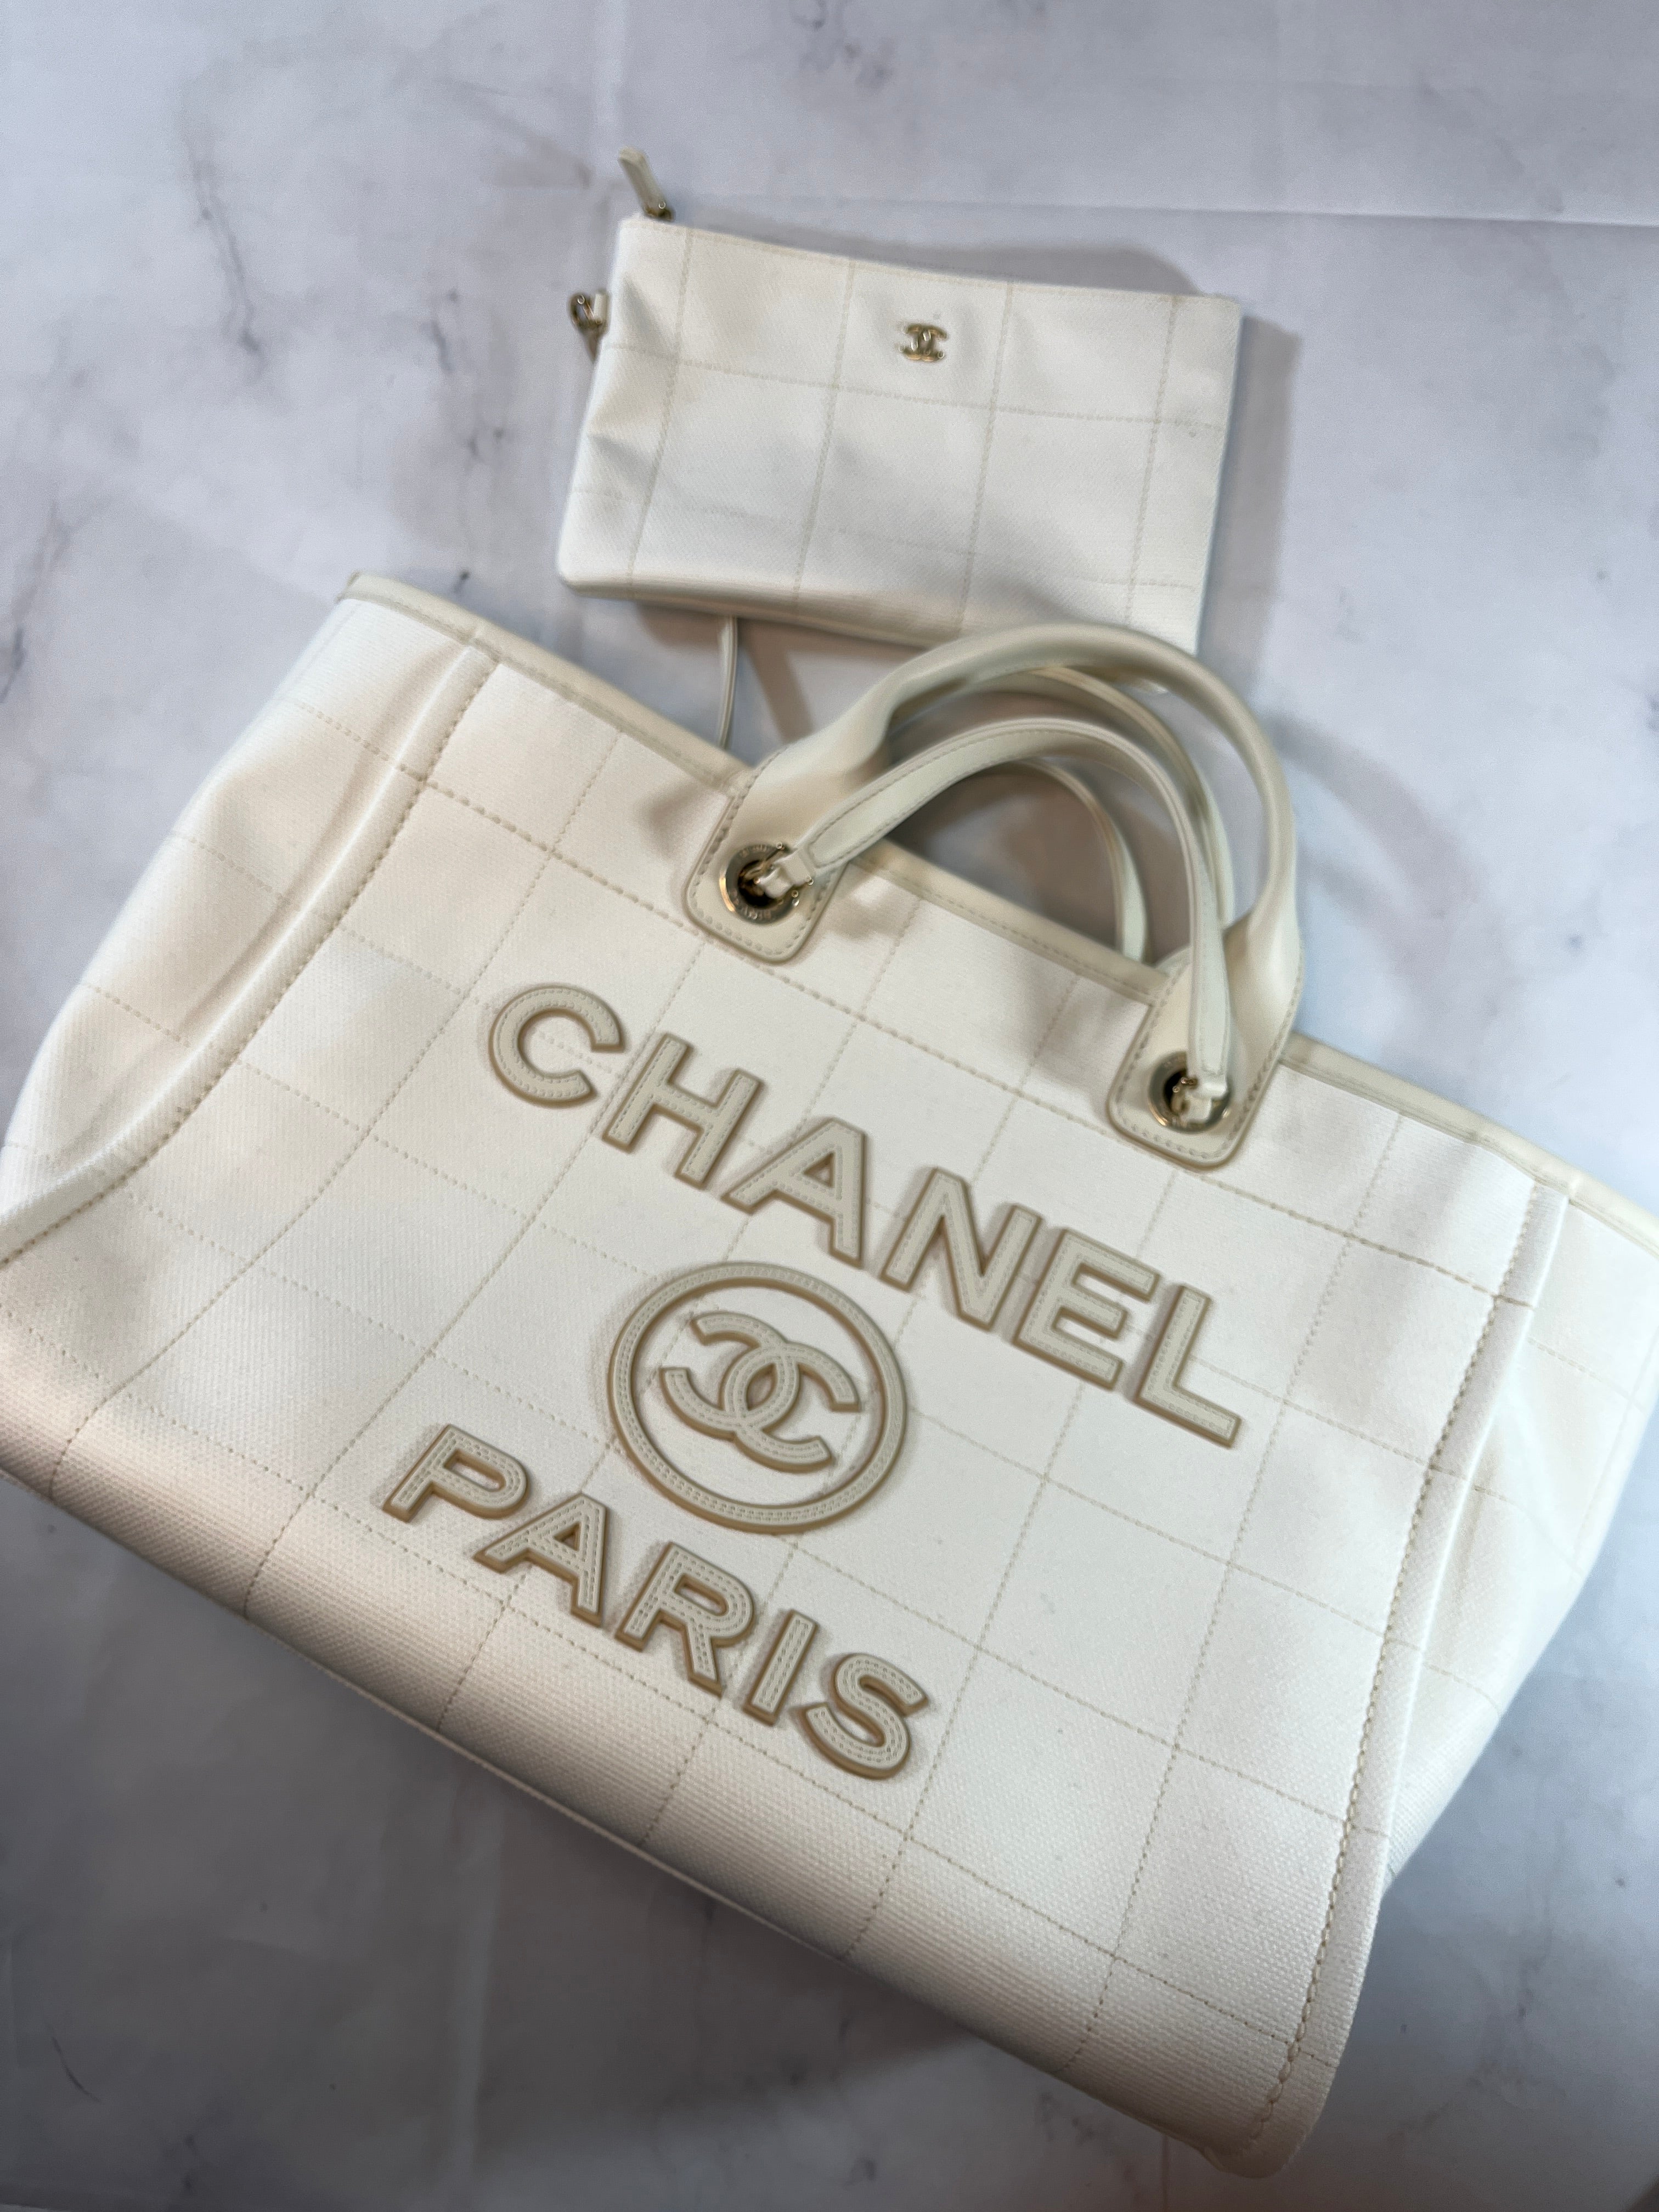 Chanel Ivory Cream Caviar leather Small Deauville tote bag + organizer  insert